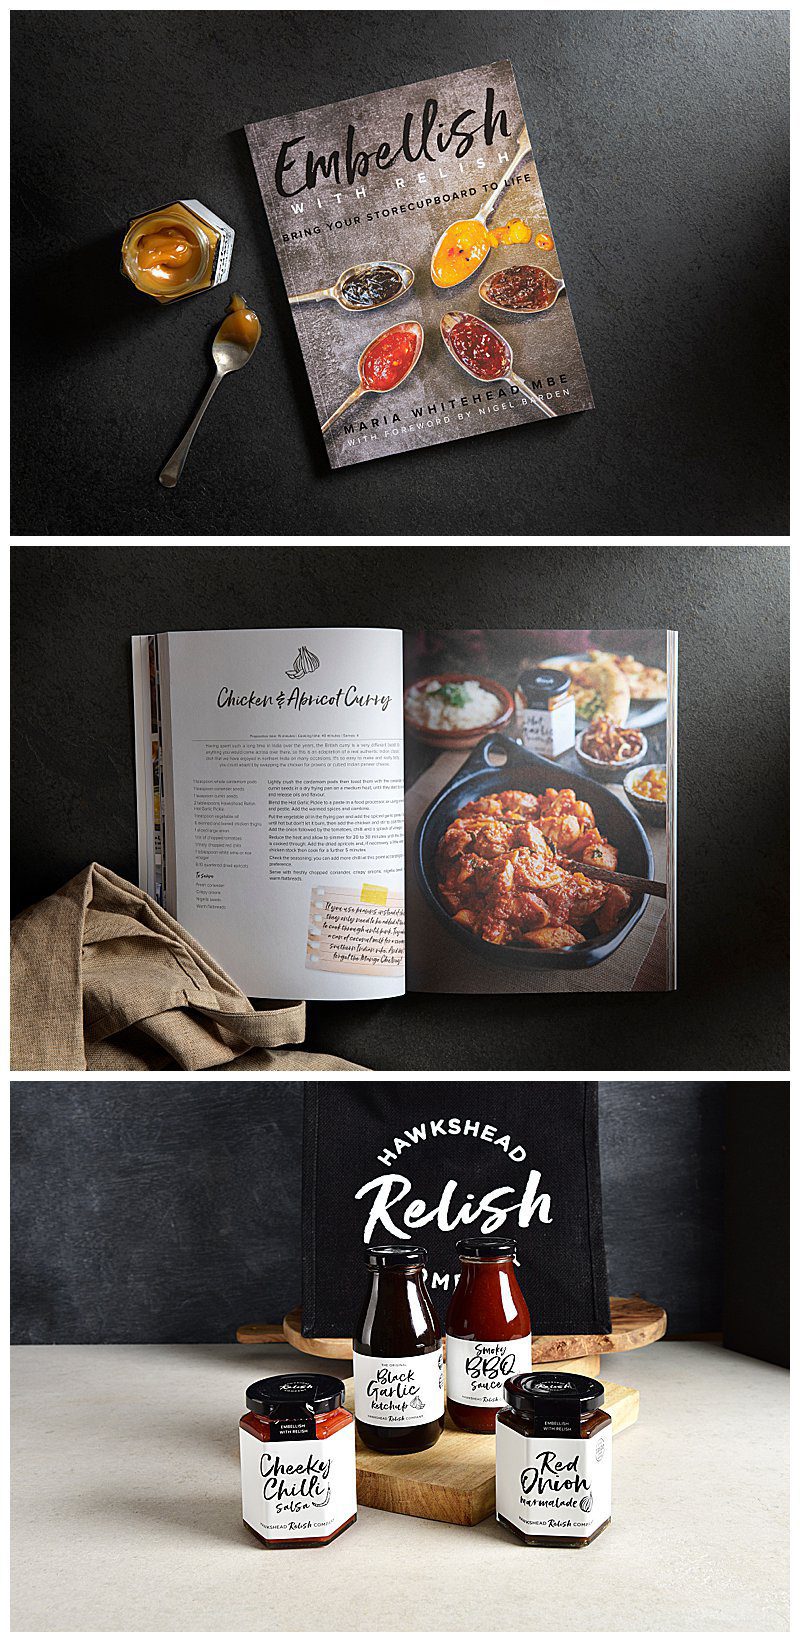 Hawkshead-Relish-Cookbook.jpg